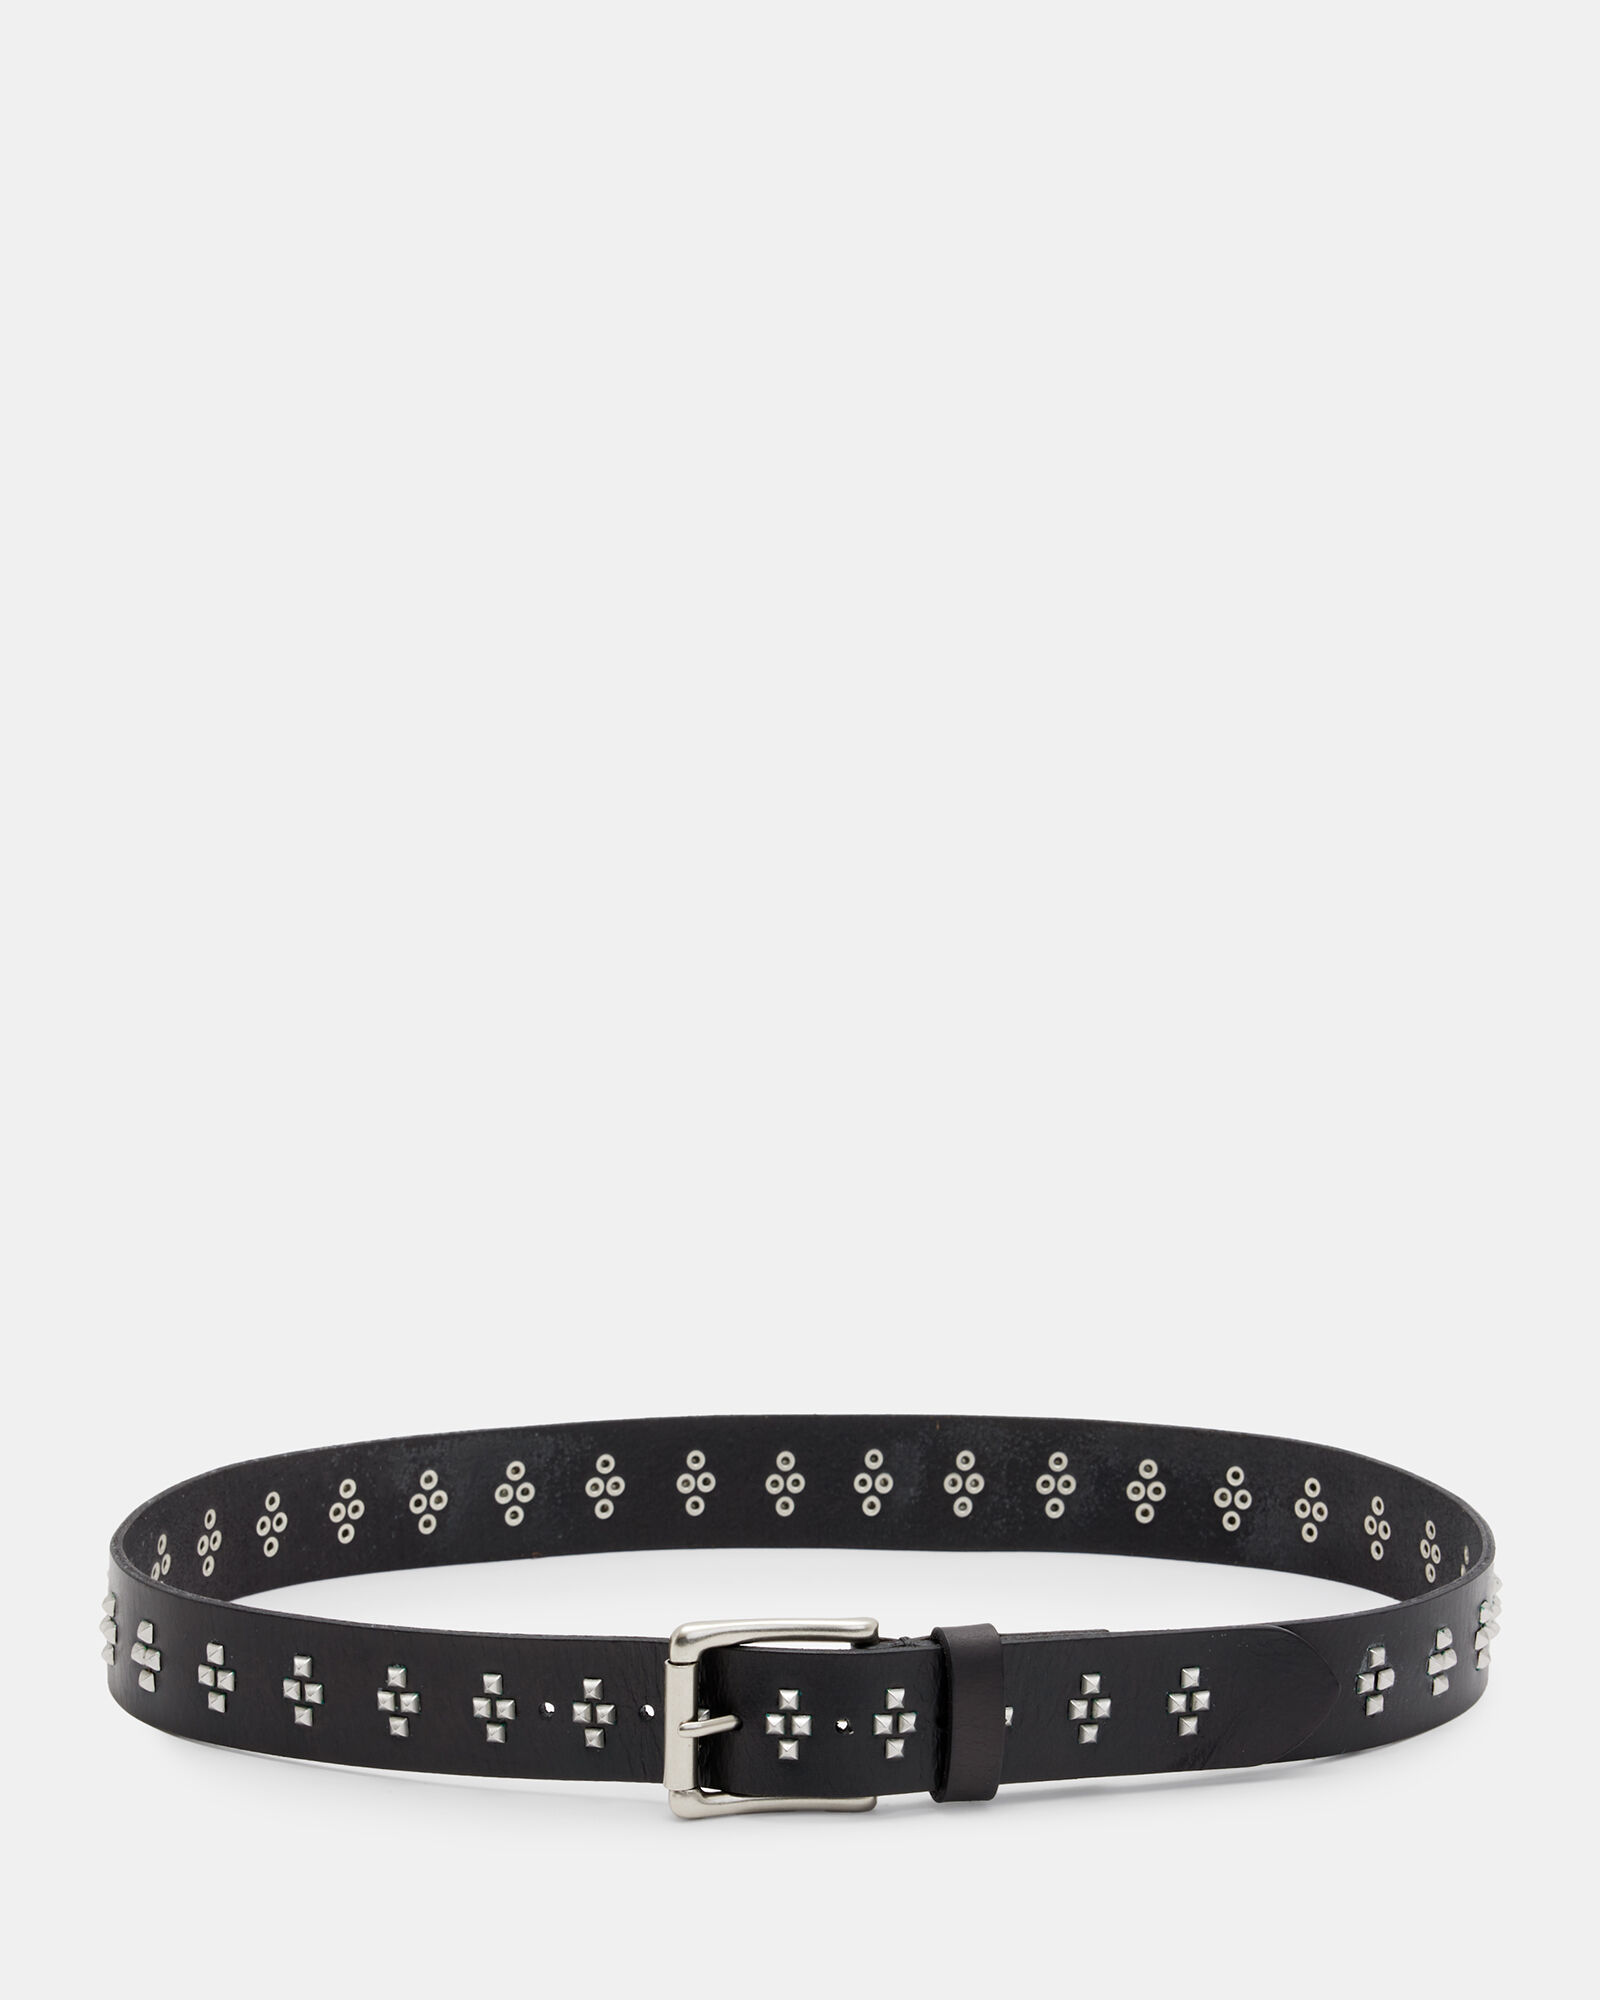 Noa Cross Studded Leather Belt BLACK/DULL NICKEL | ALLSAINTS US